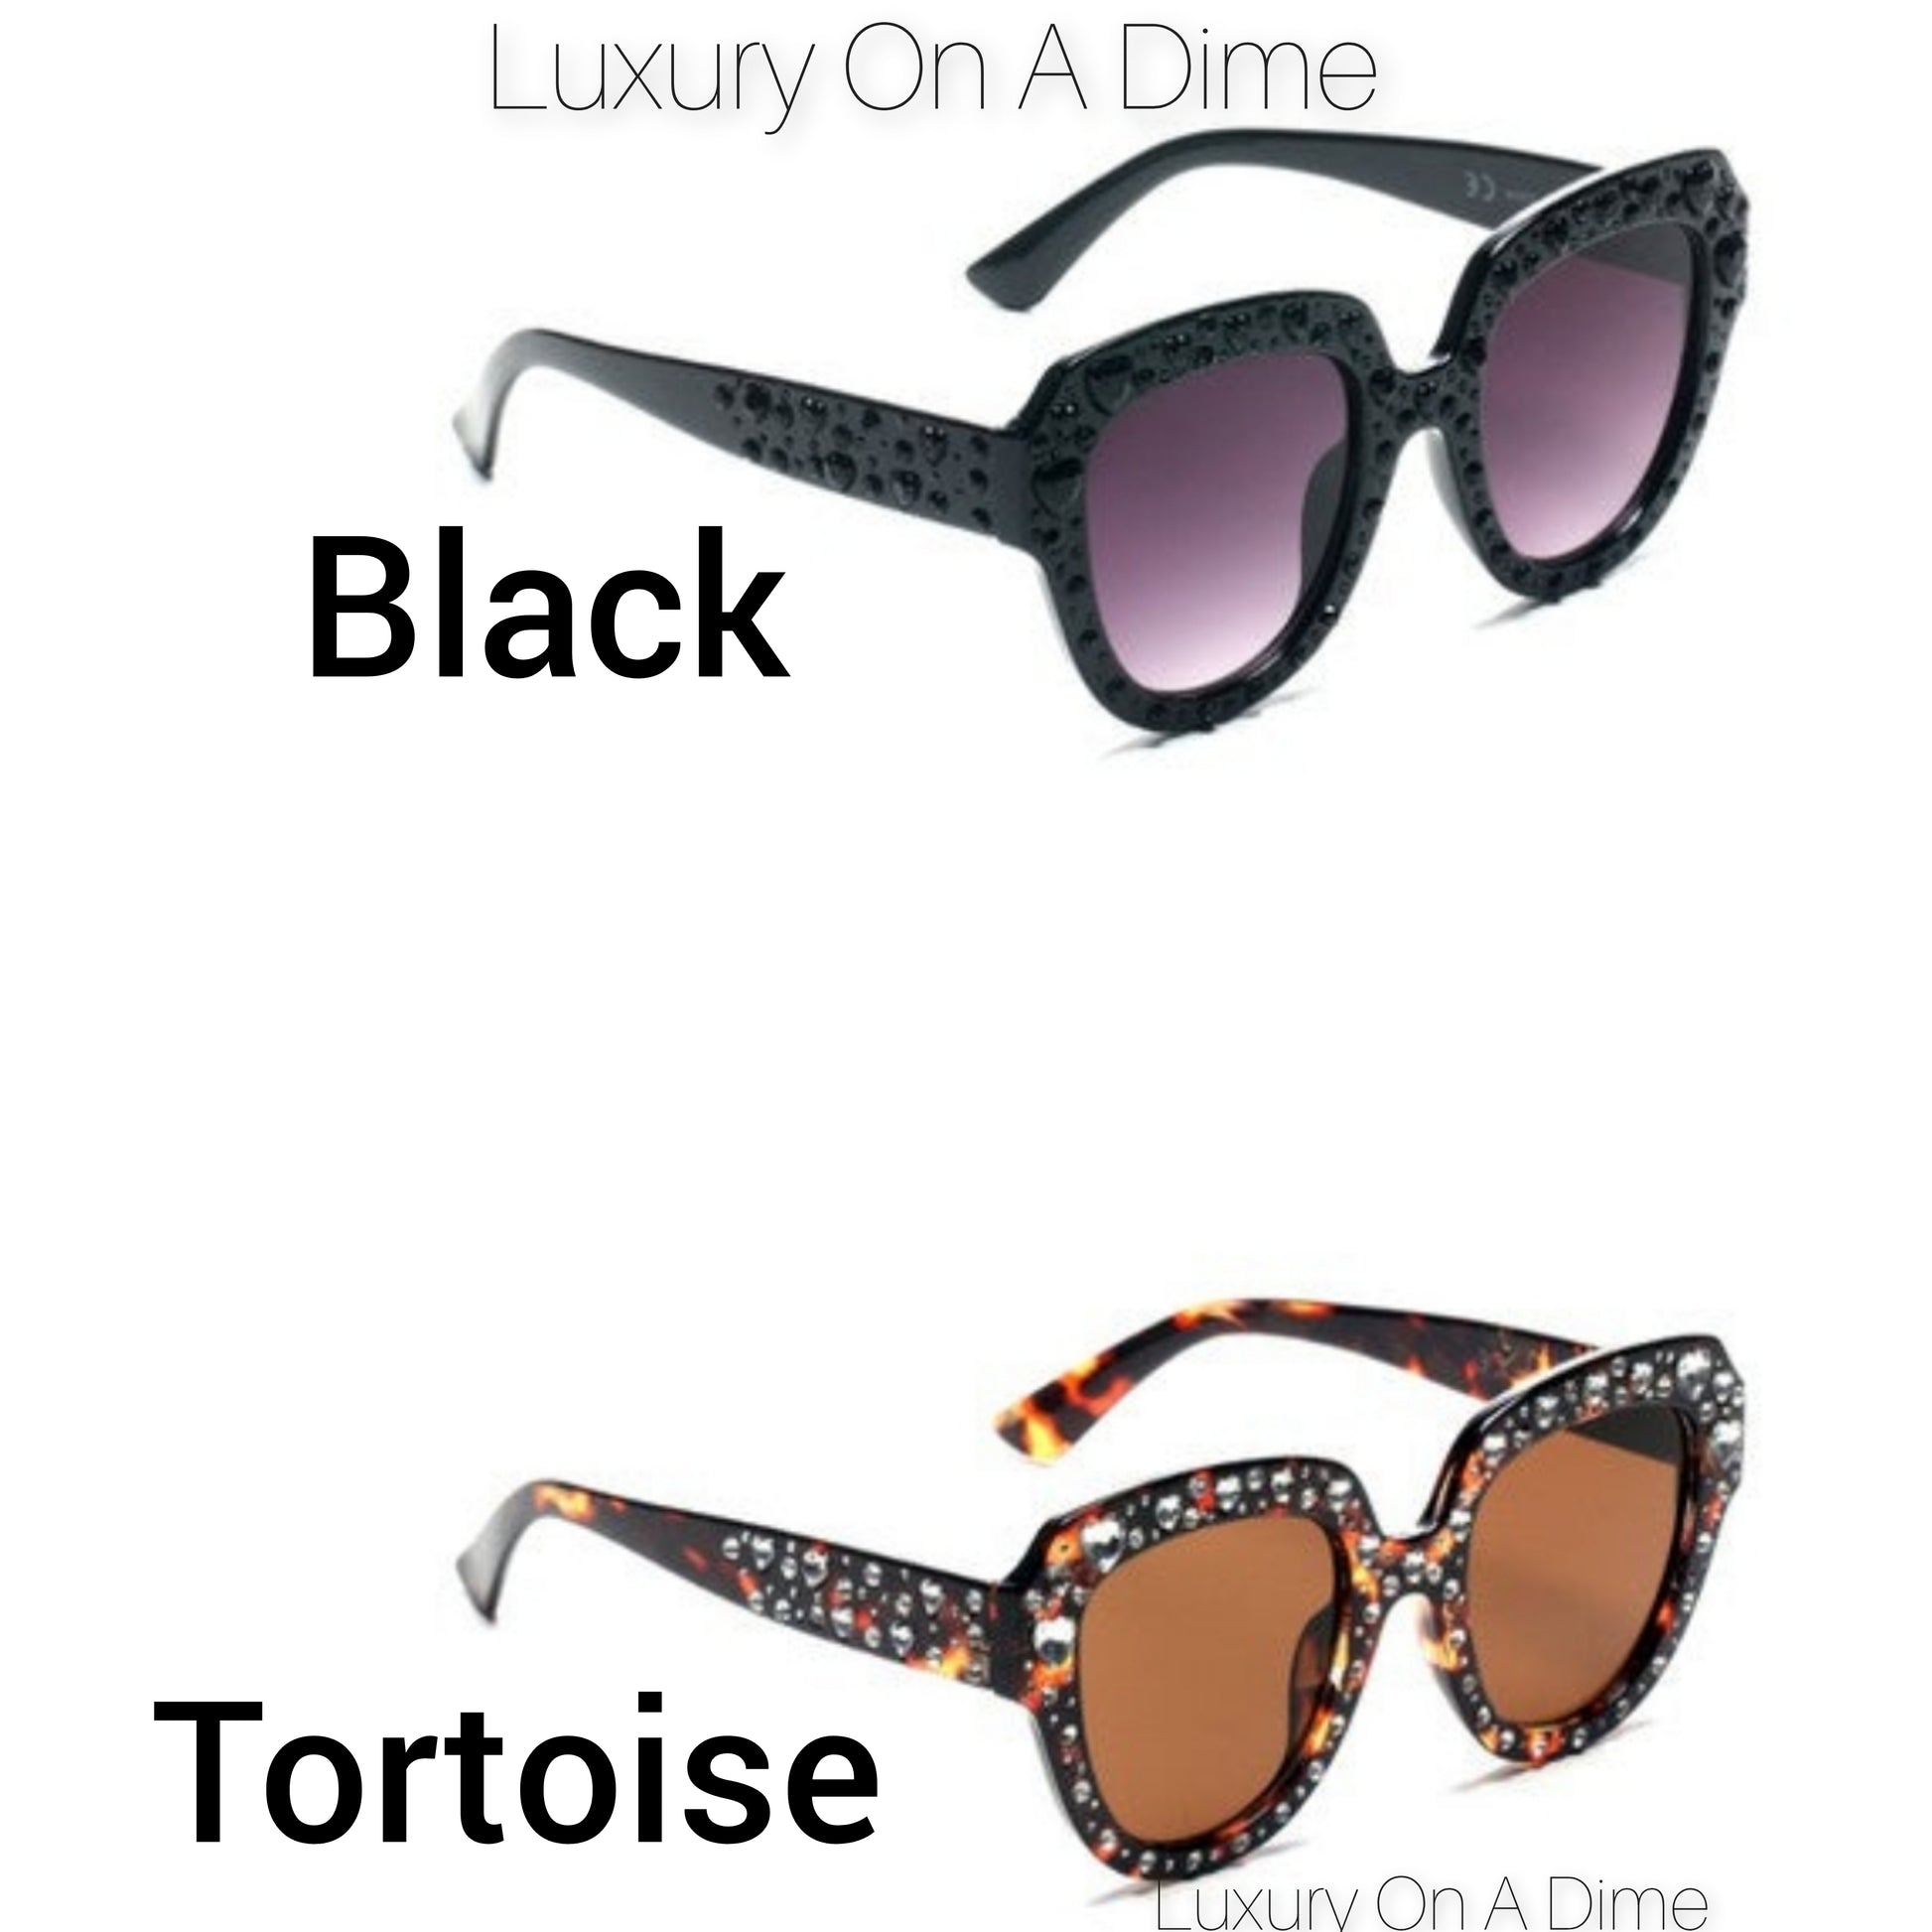 Rhinestone Sunglasses Heart Studded Round Cat Eye Women's Fashion UVA UVB Eye Protection Case Included